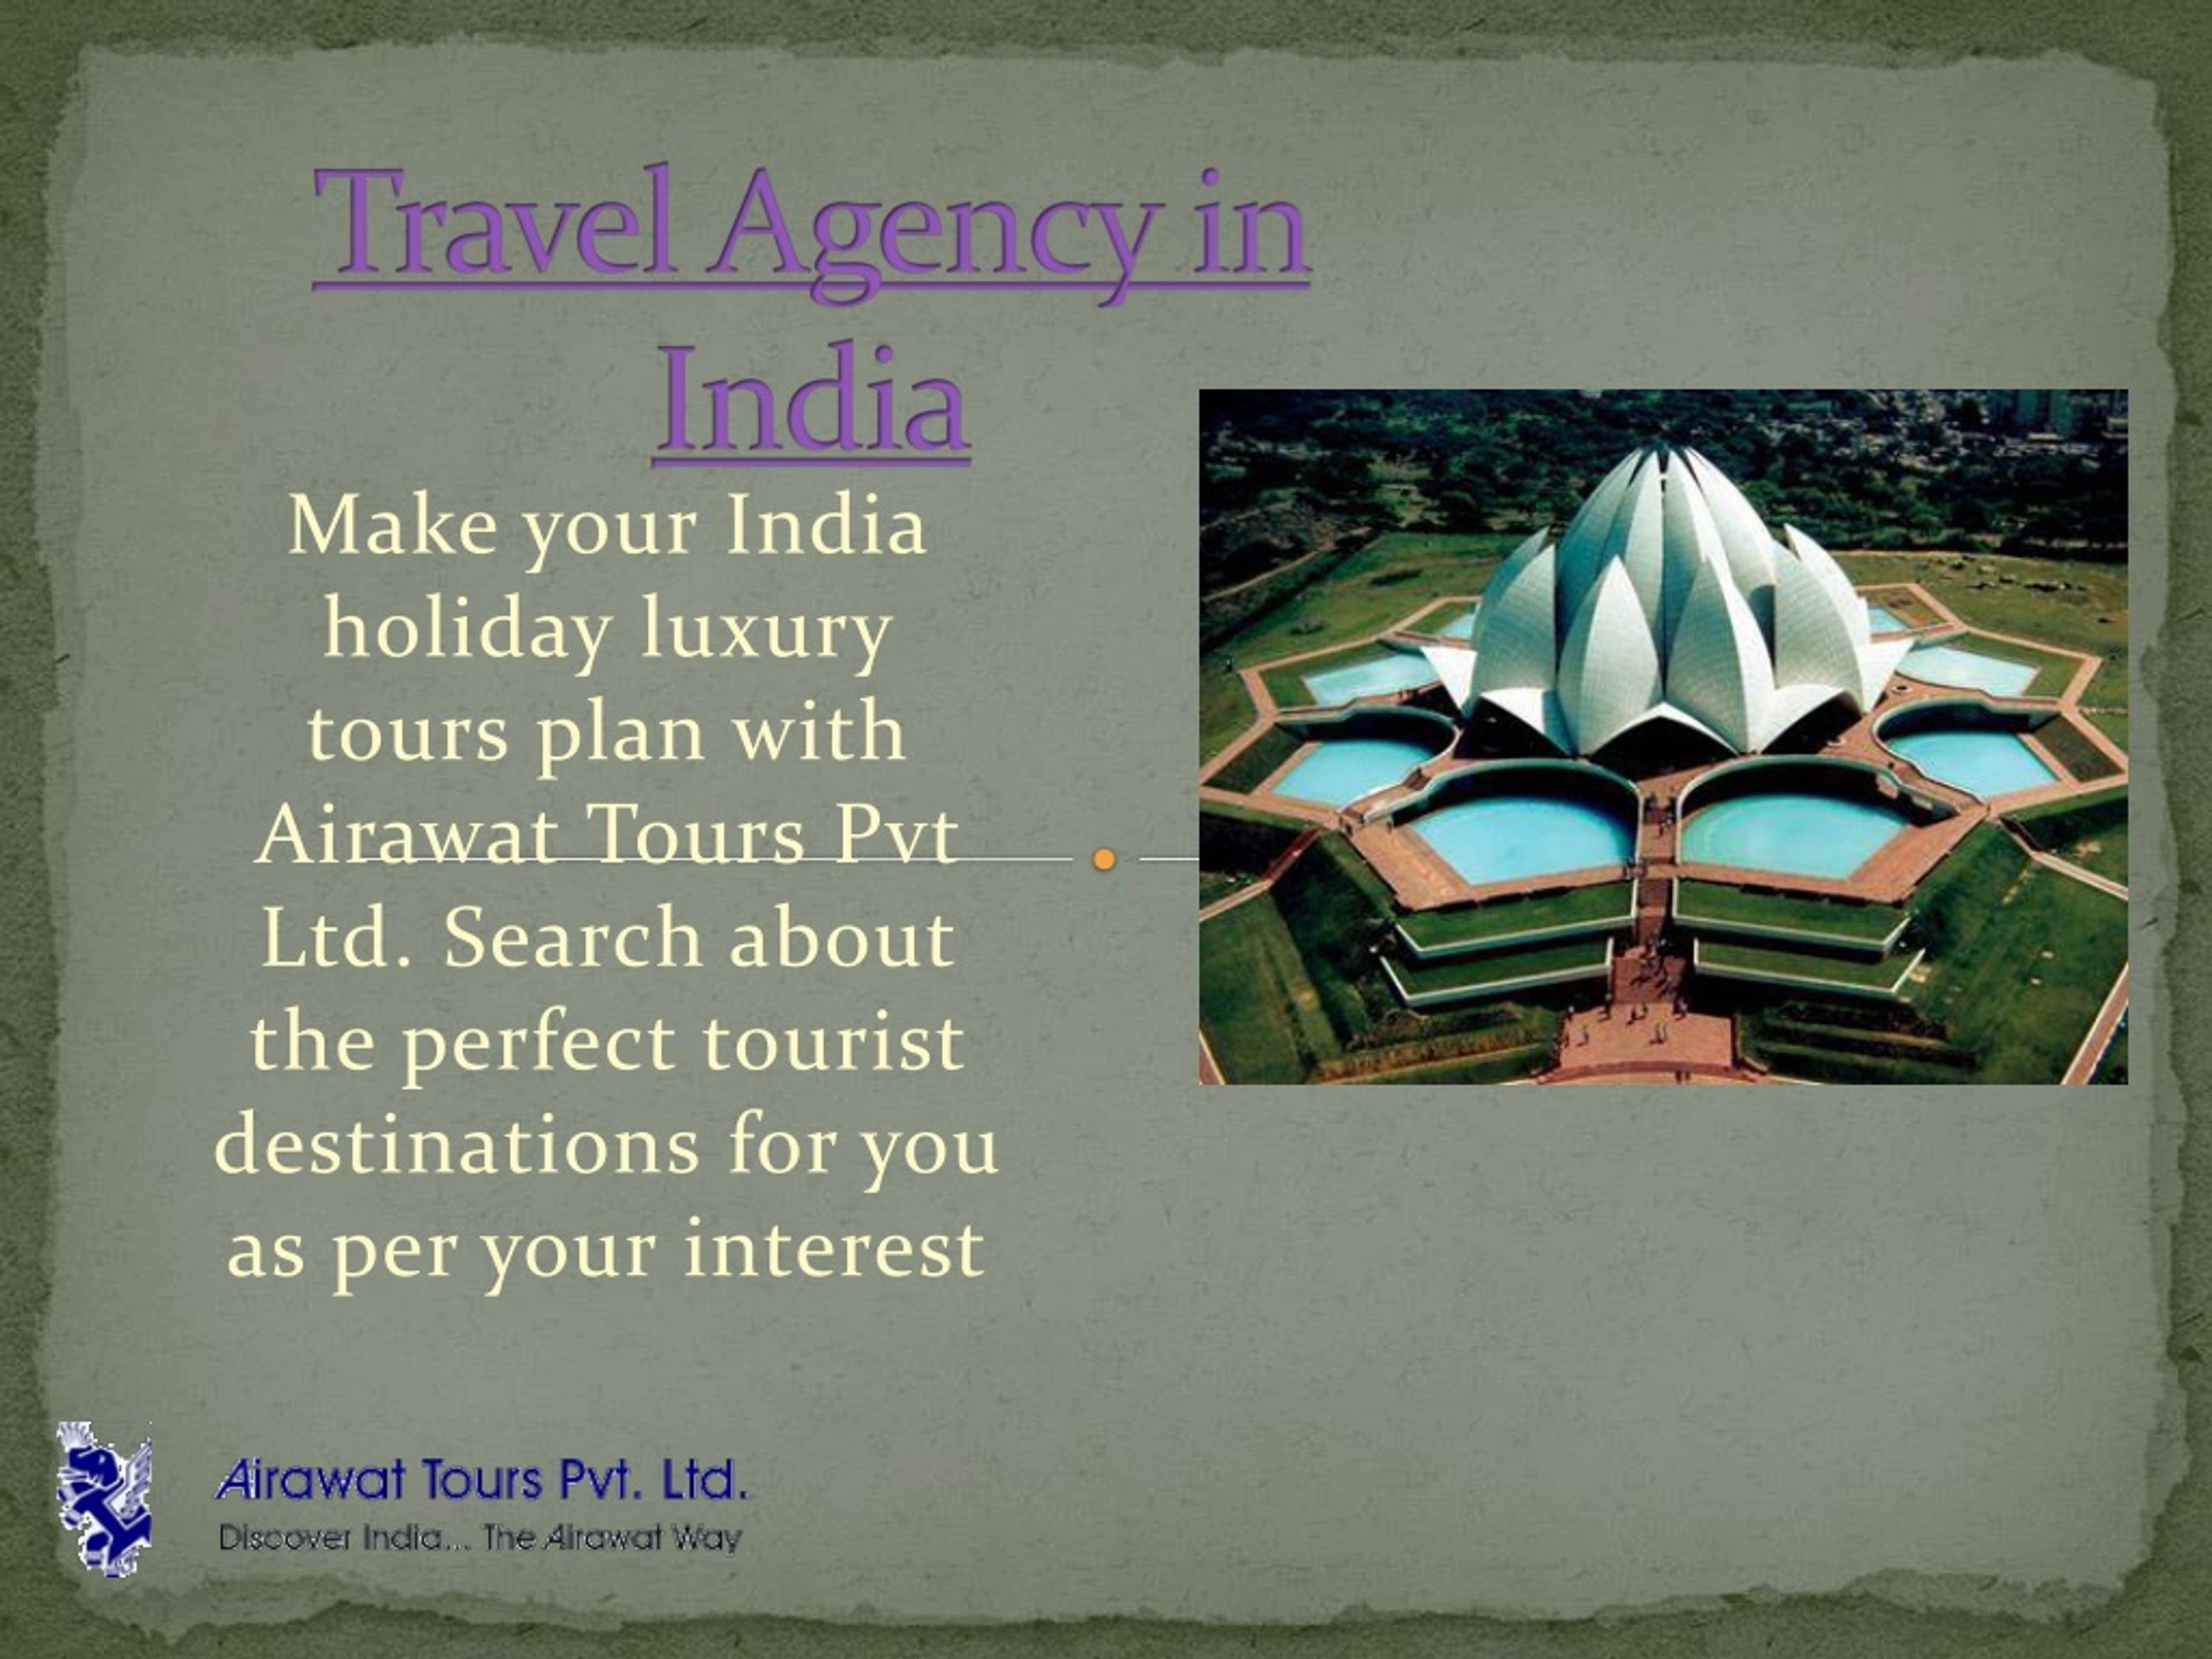 travel agent law india